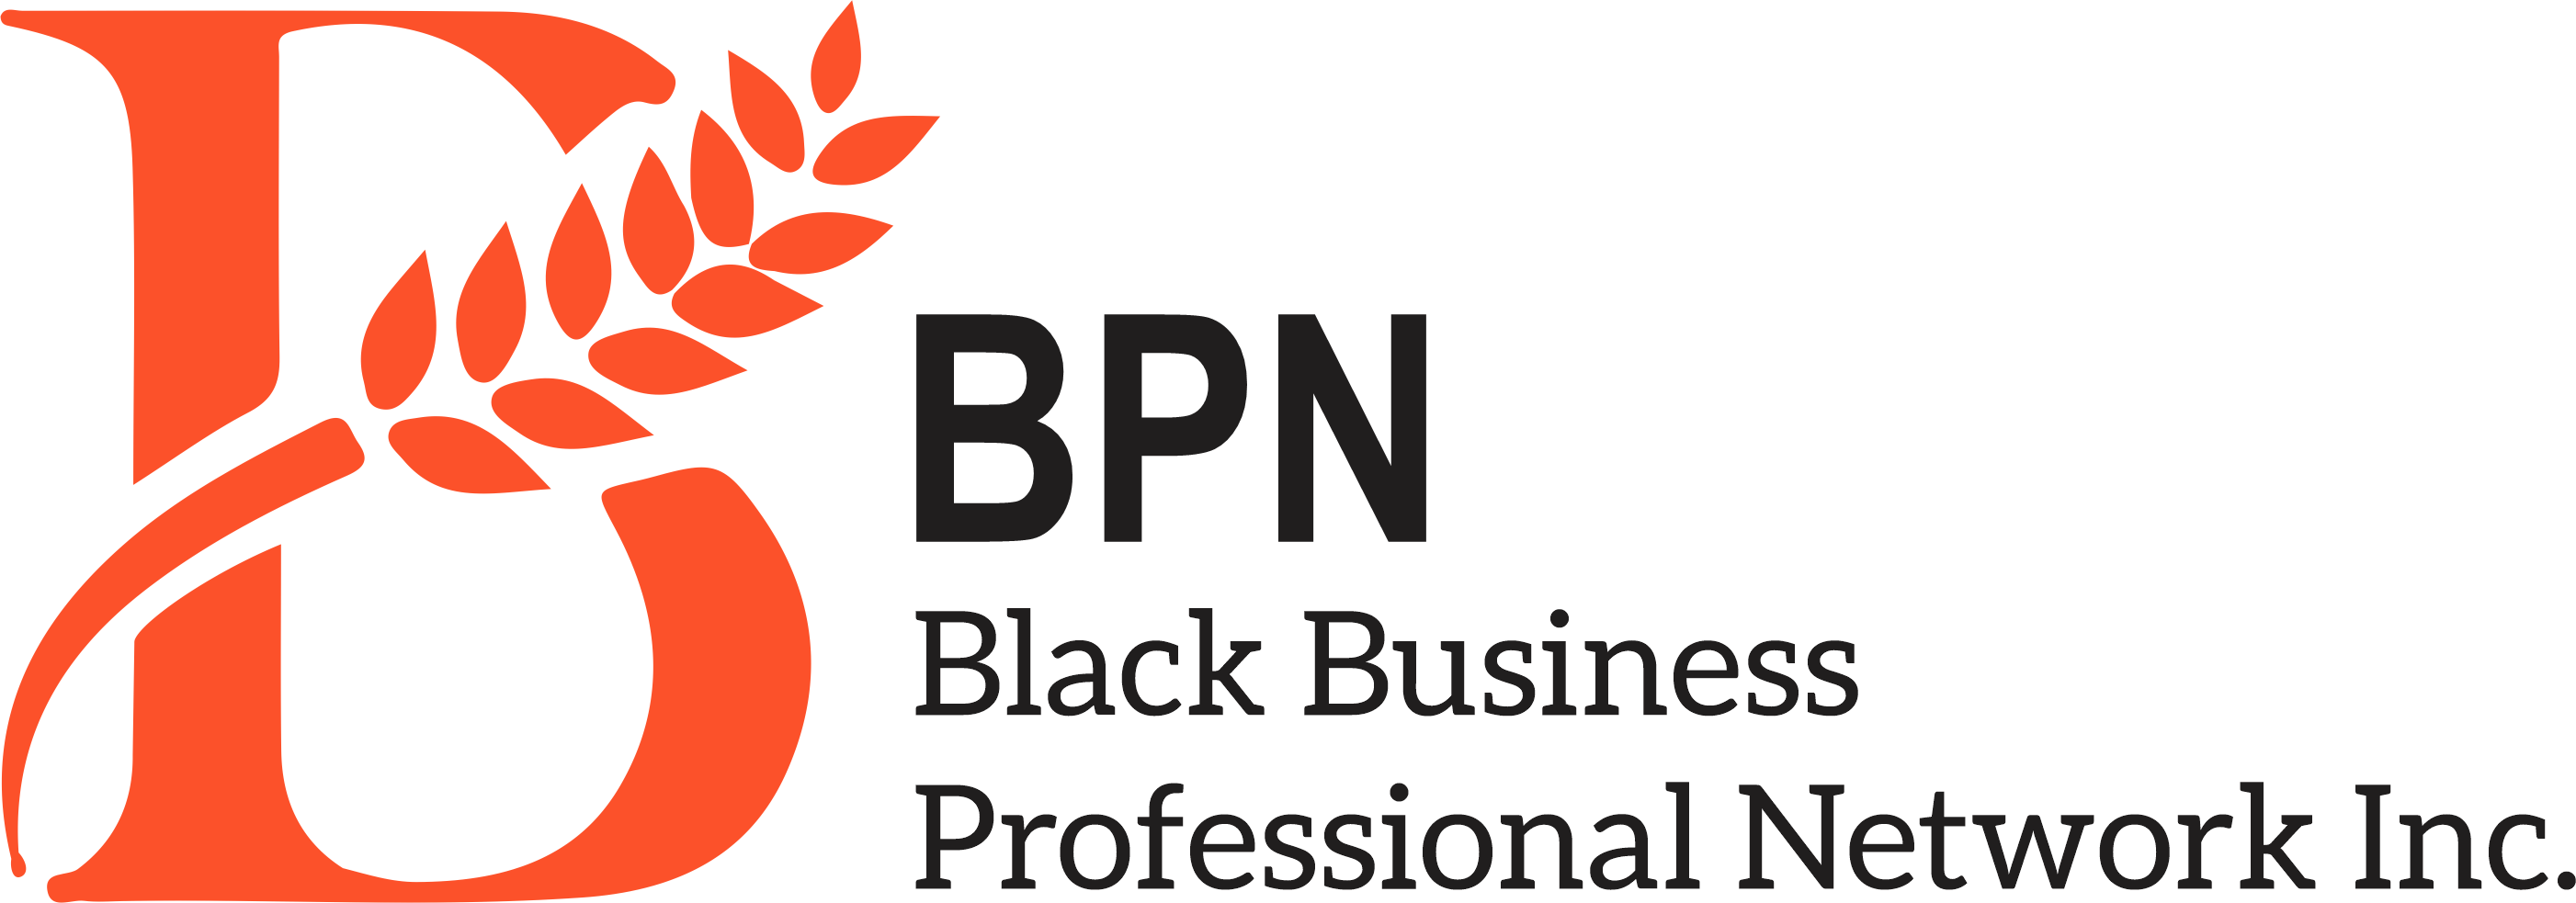 BBPN logo